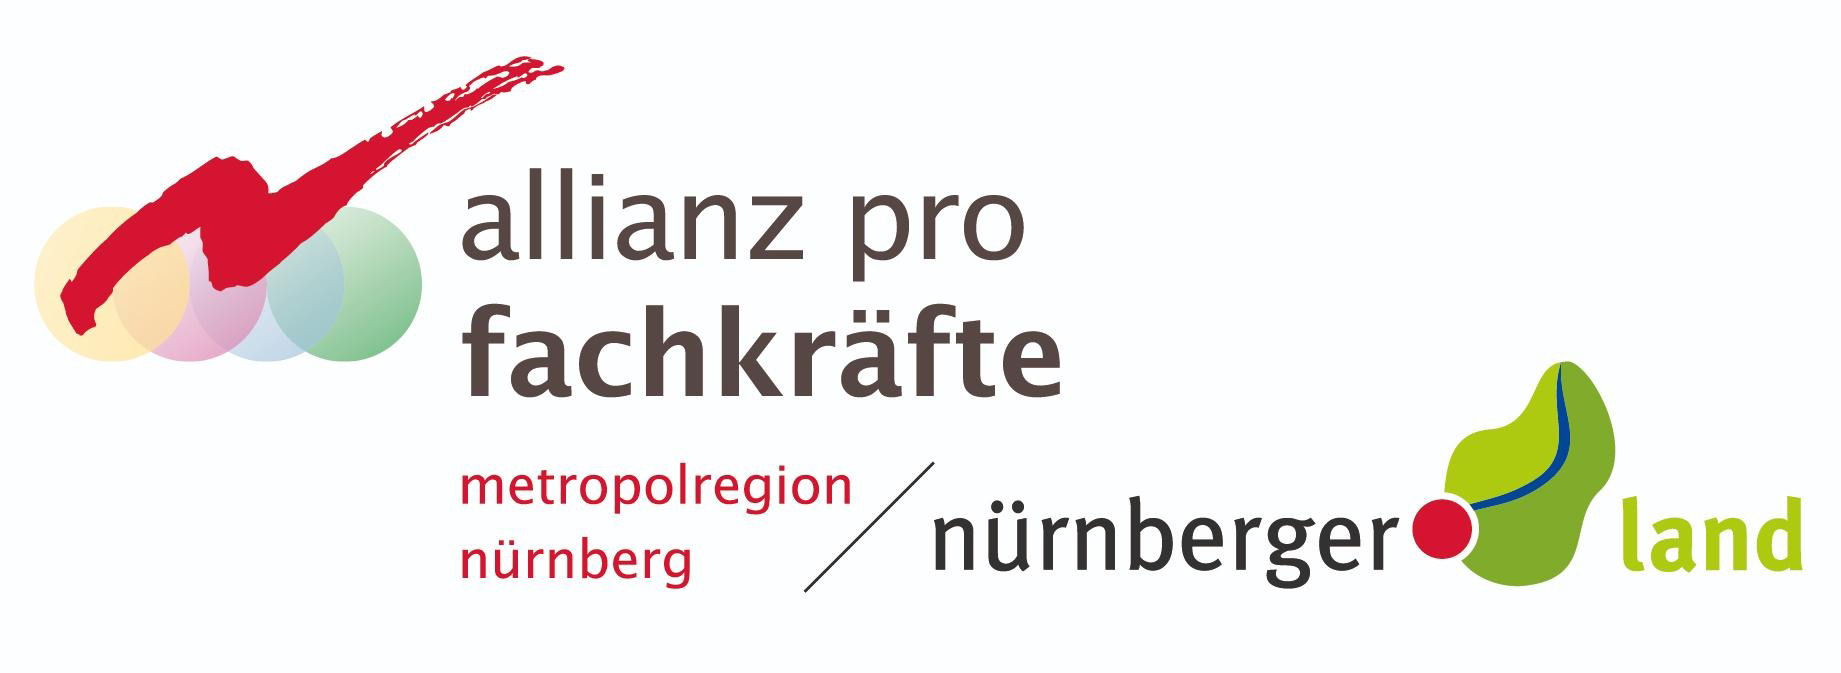 Allianz pro Fachkräfte im Nürnberger Land